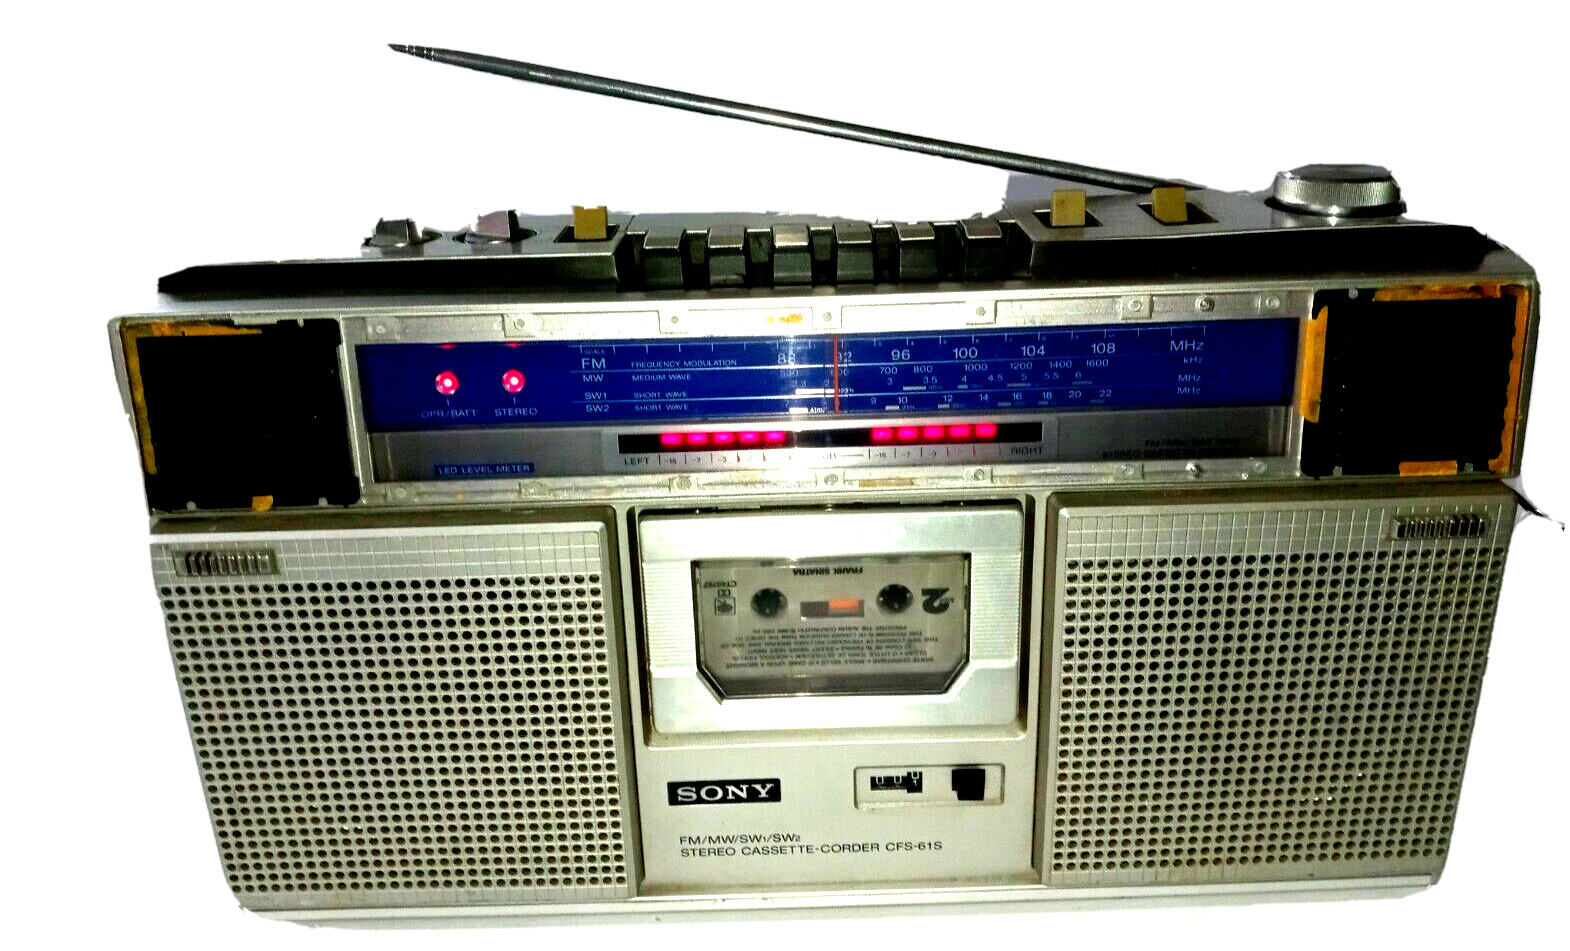 Vintage Sony CFS-61S FM Stereo Cassette Recorder Tape Deck Boombox FM/FW/SW1/SW2